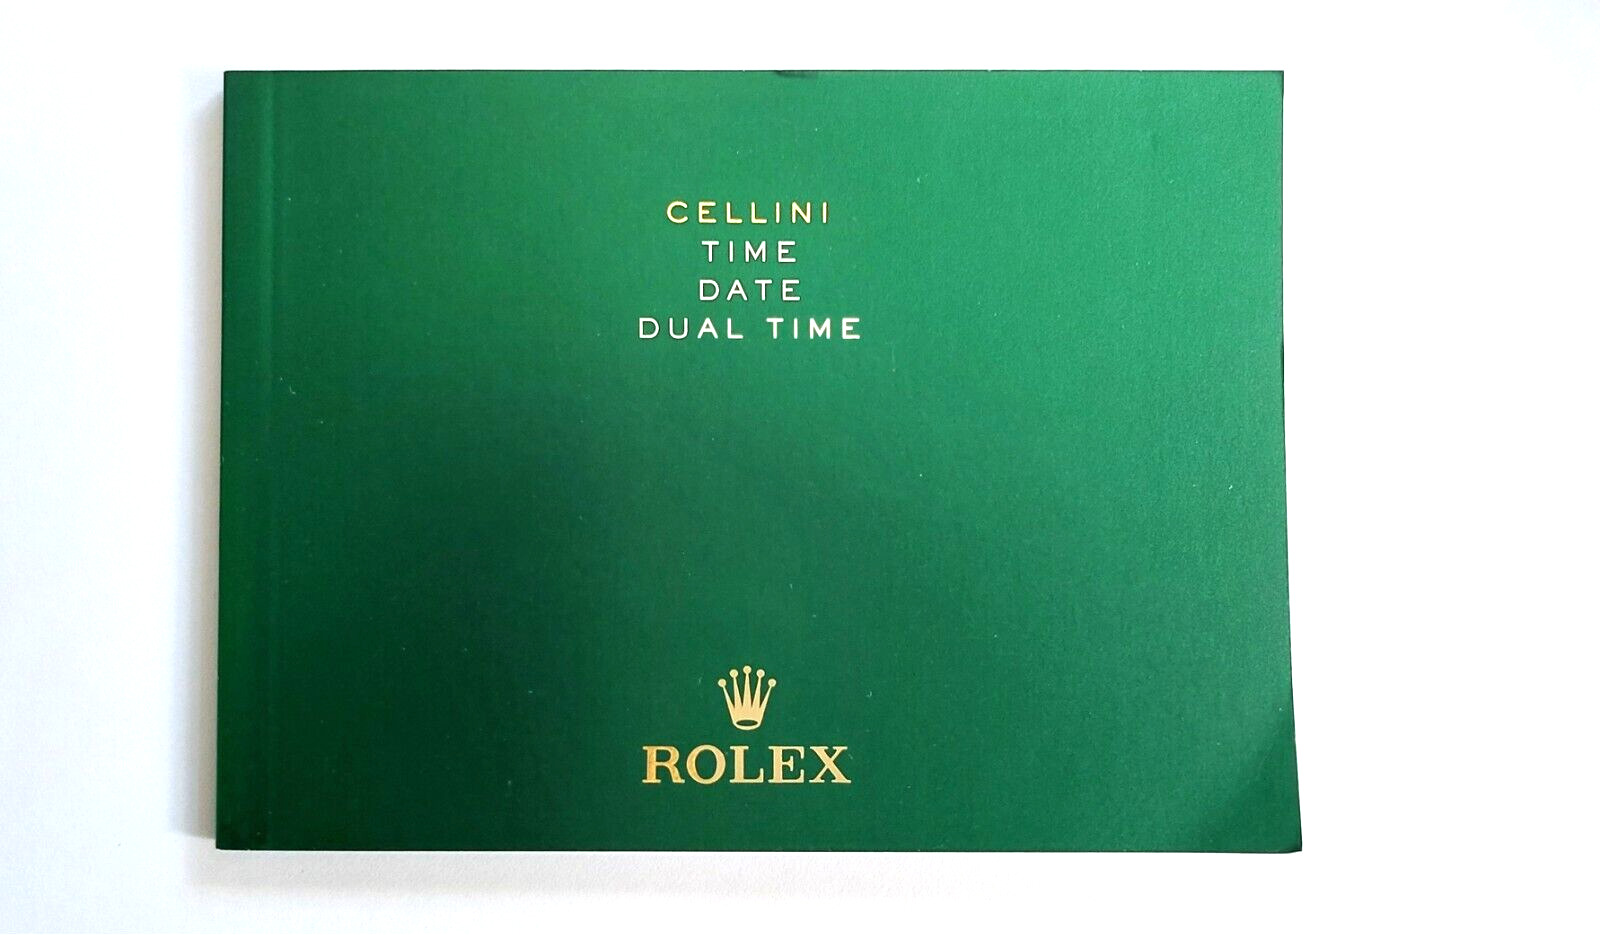 Original Rolex Cellini Time Date Dual Time Booklet 598.42 Engl-5.2015